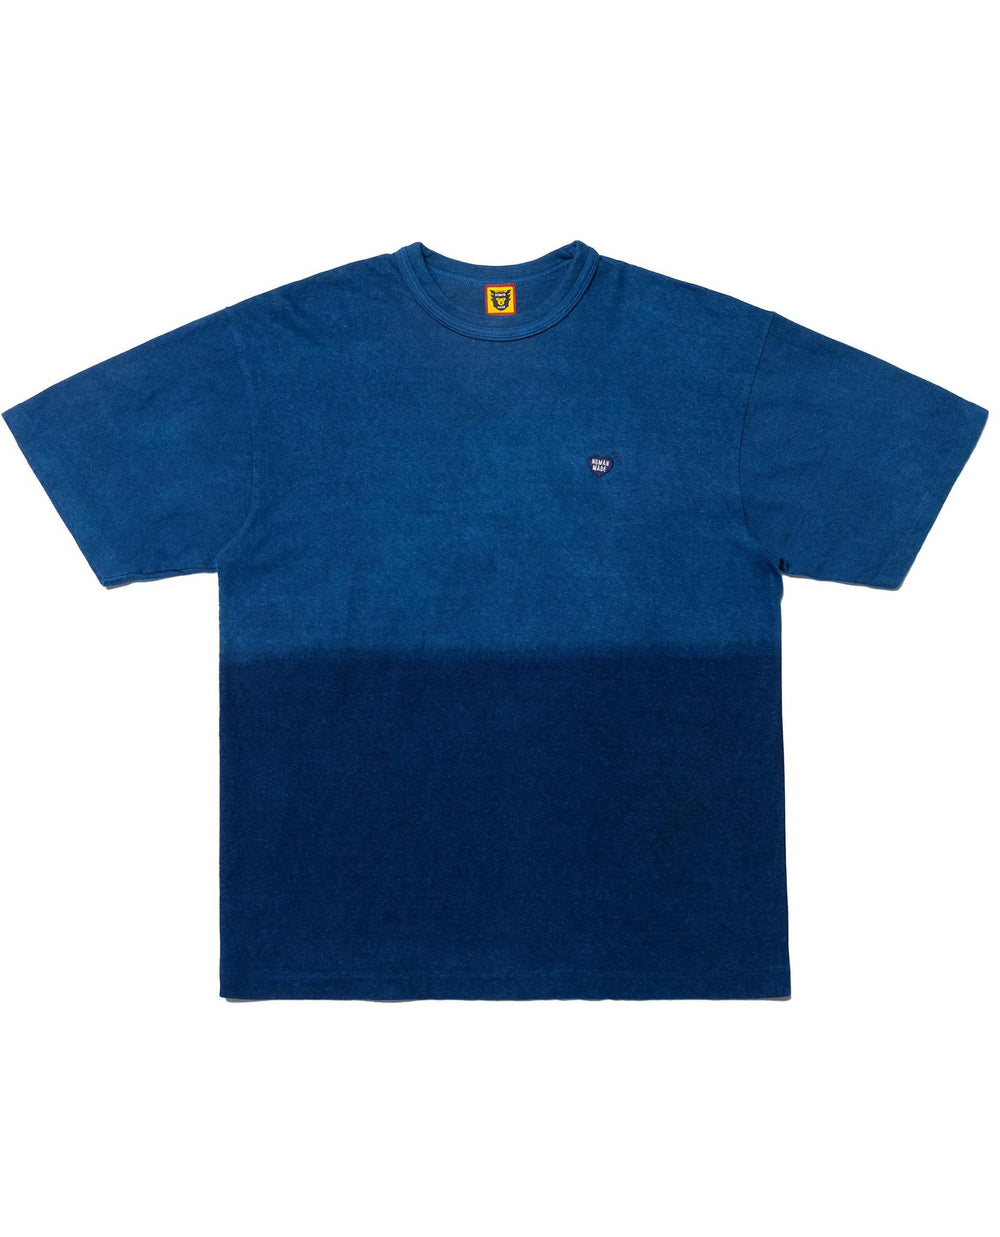 Human Made Indigo Dyed T-Shirt #1 | STASHED